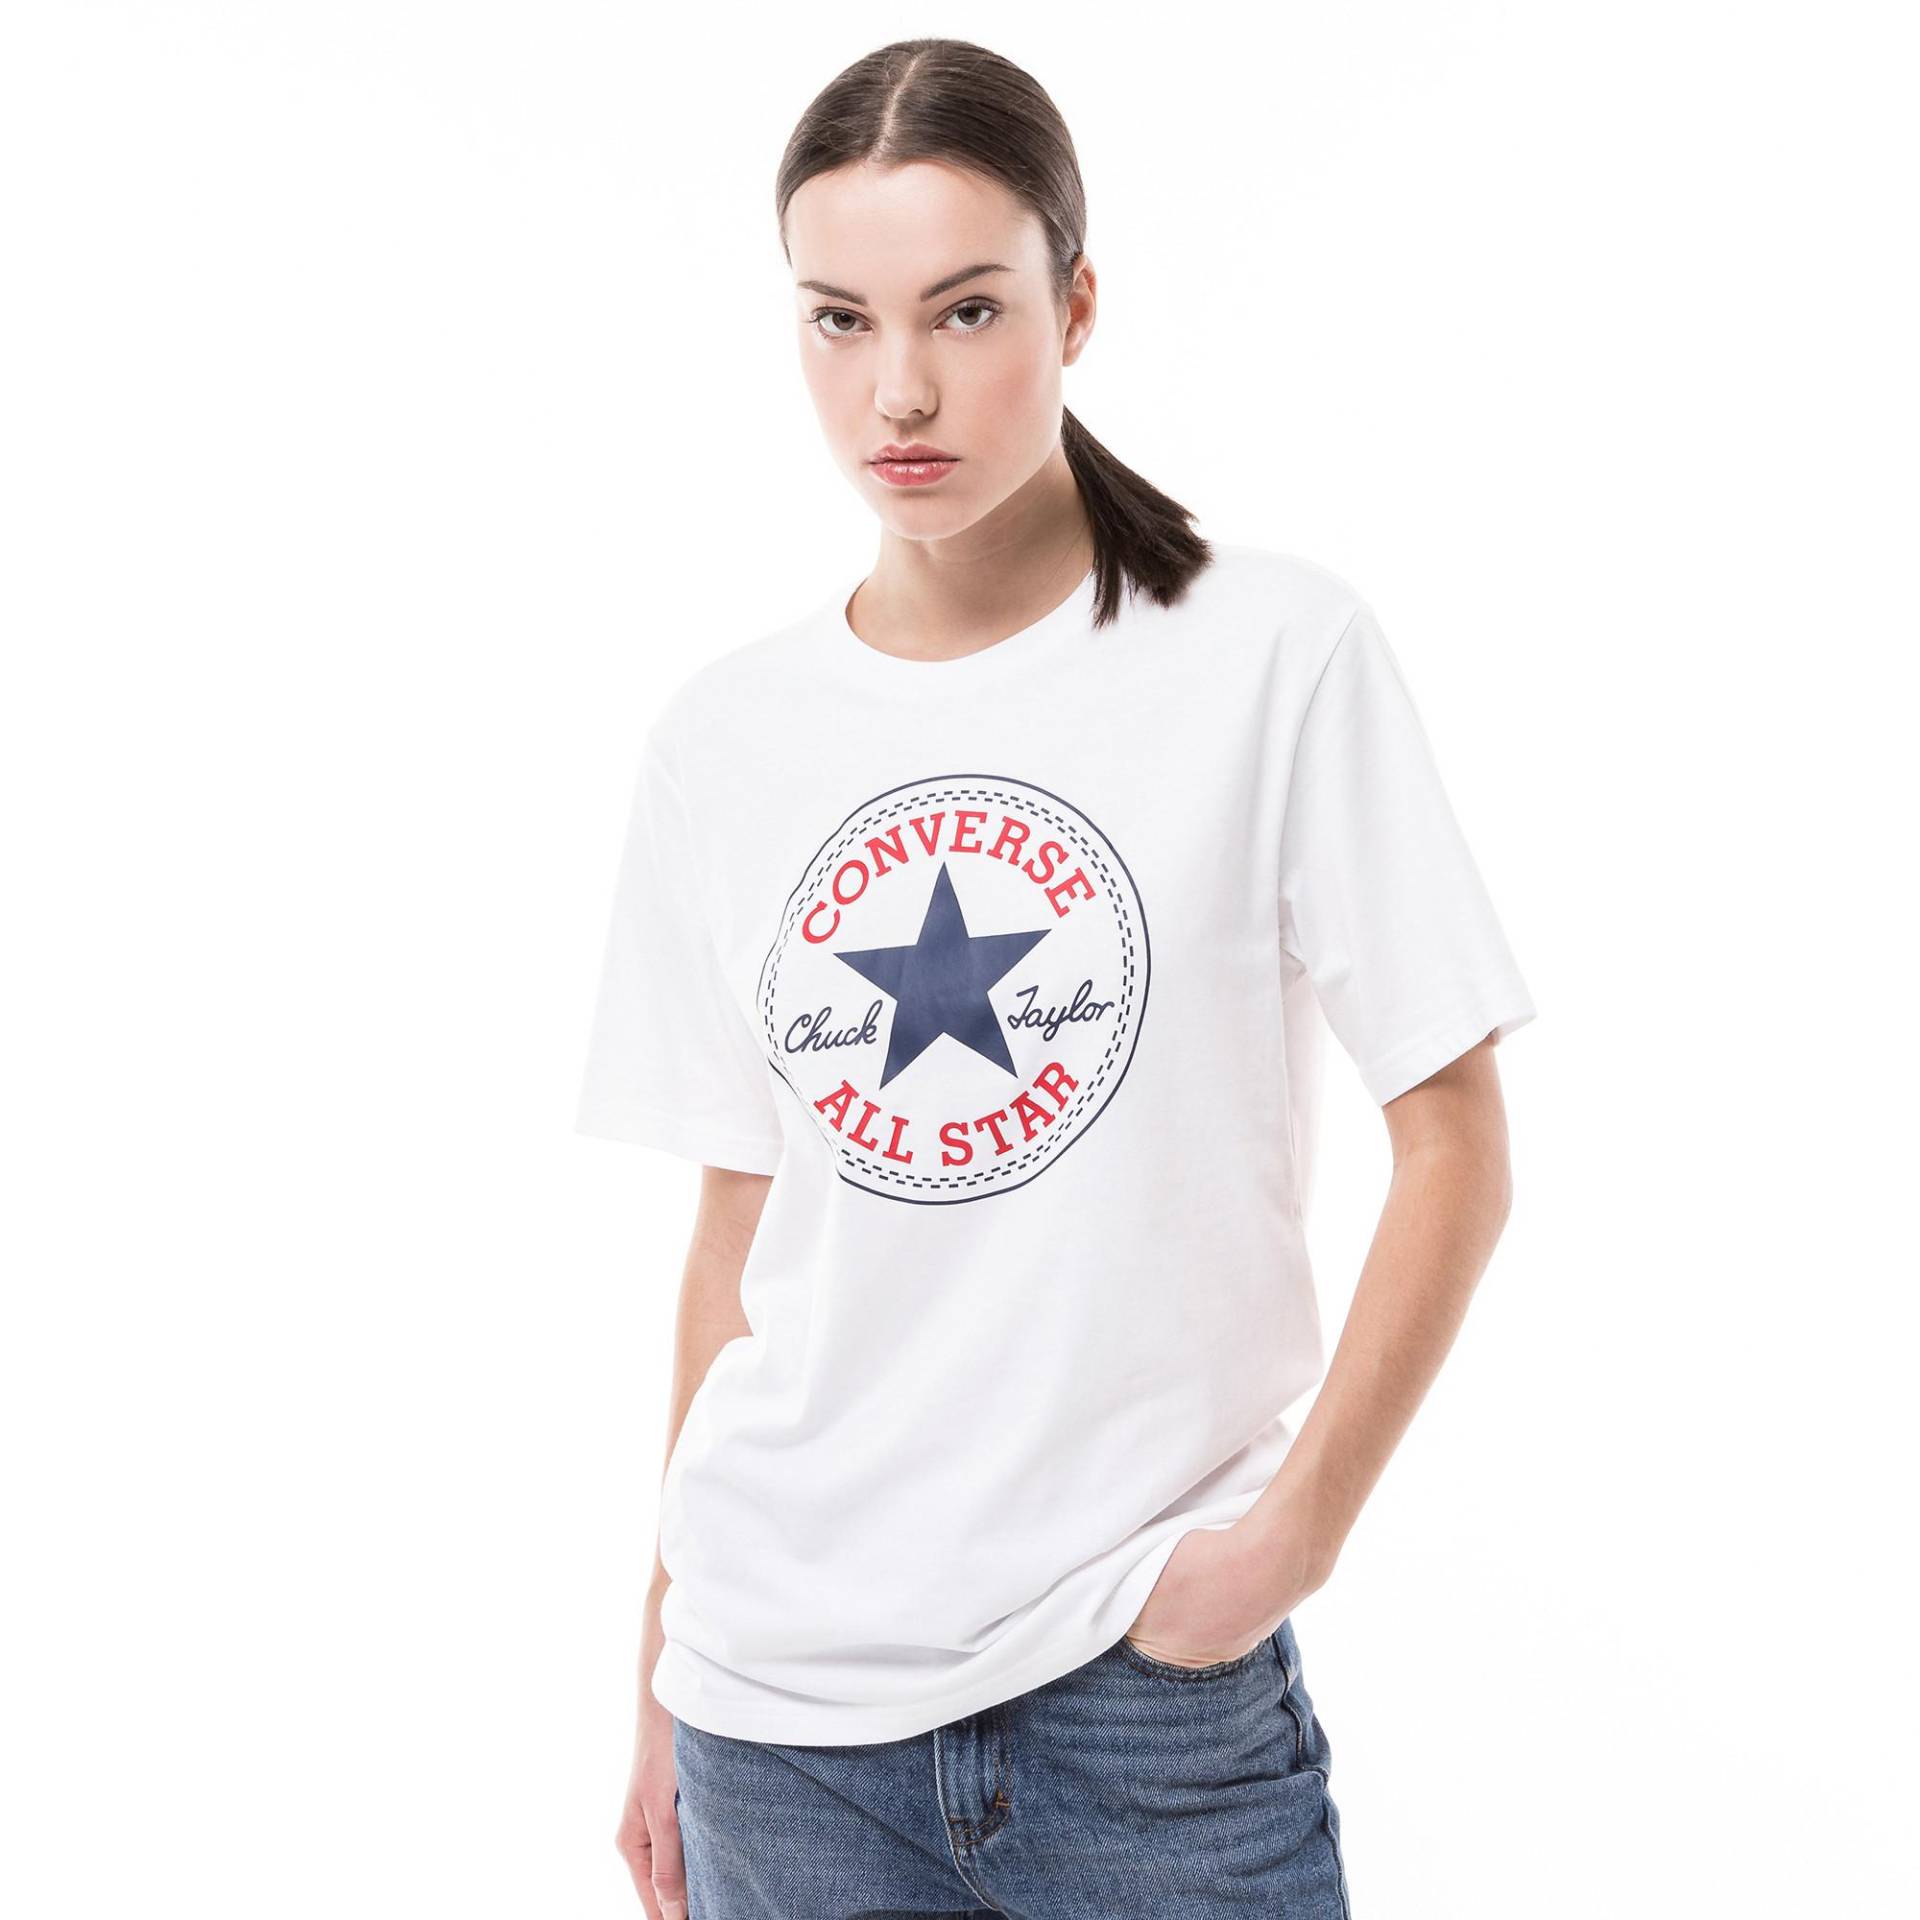 T-shirt Damen Weiss S von CONVERSE